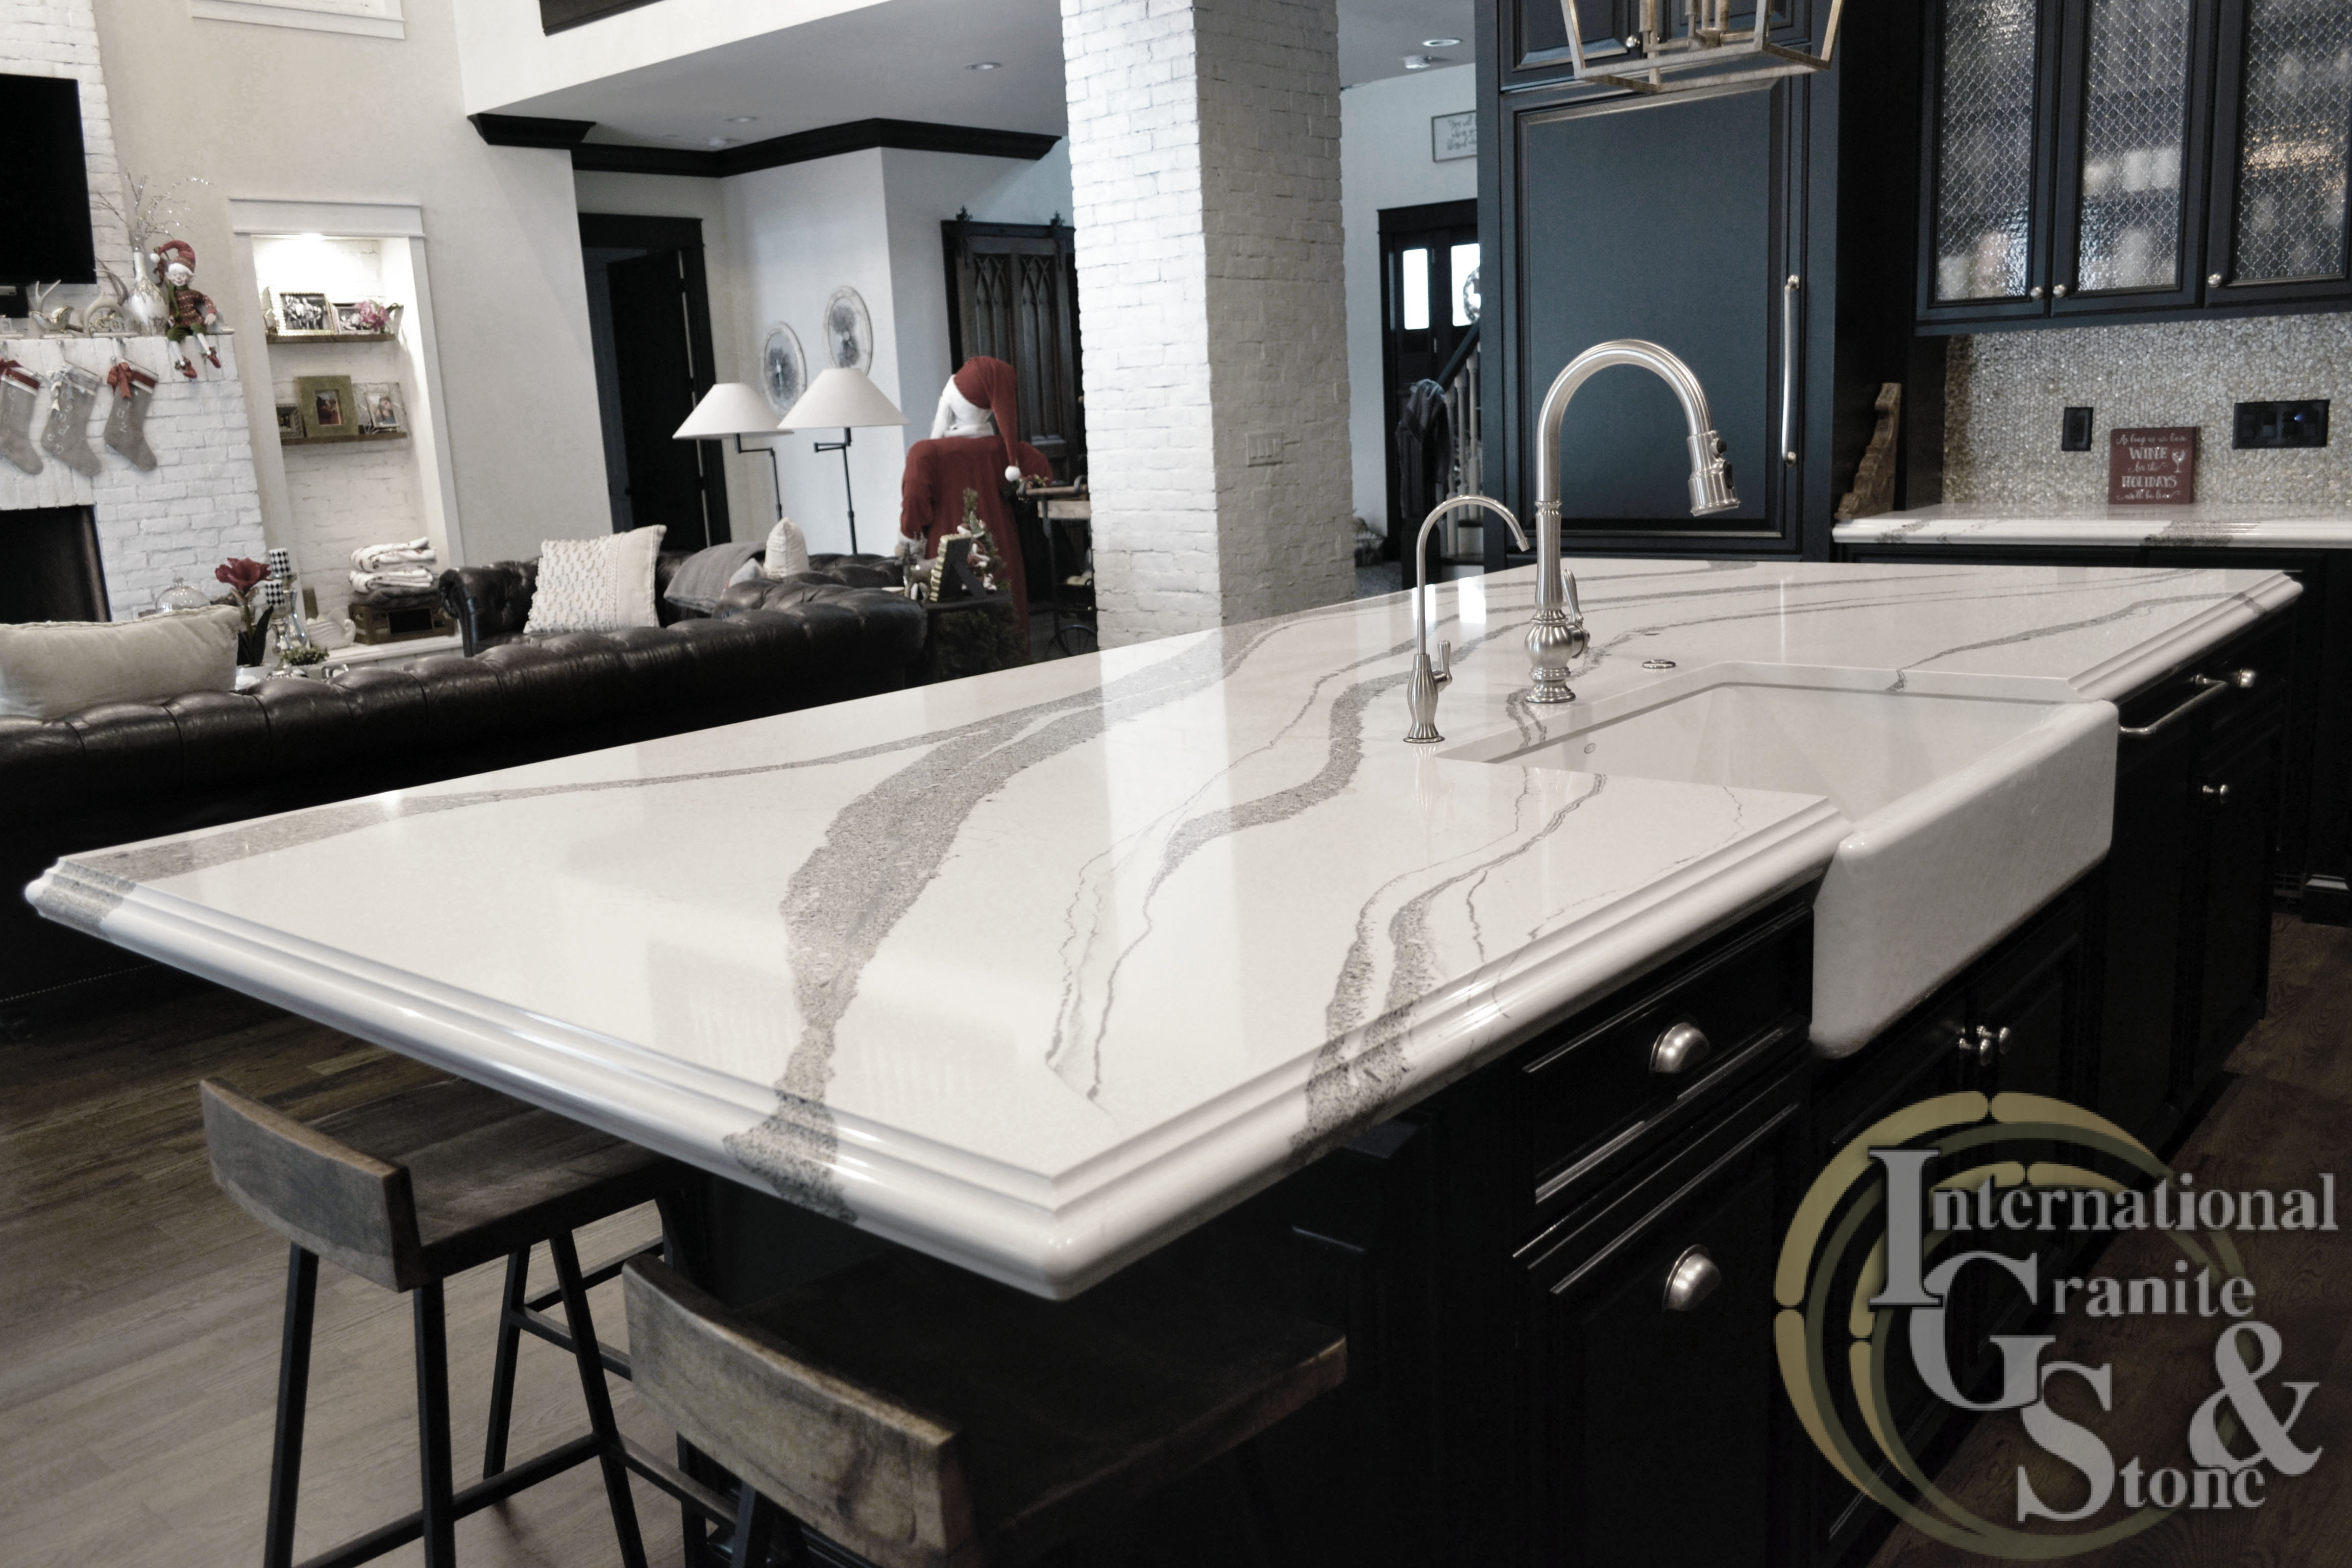 Cambria Annicca Quartz Kitchen with Apron Front Sink